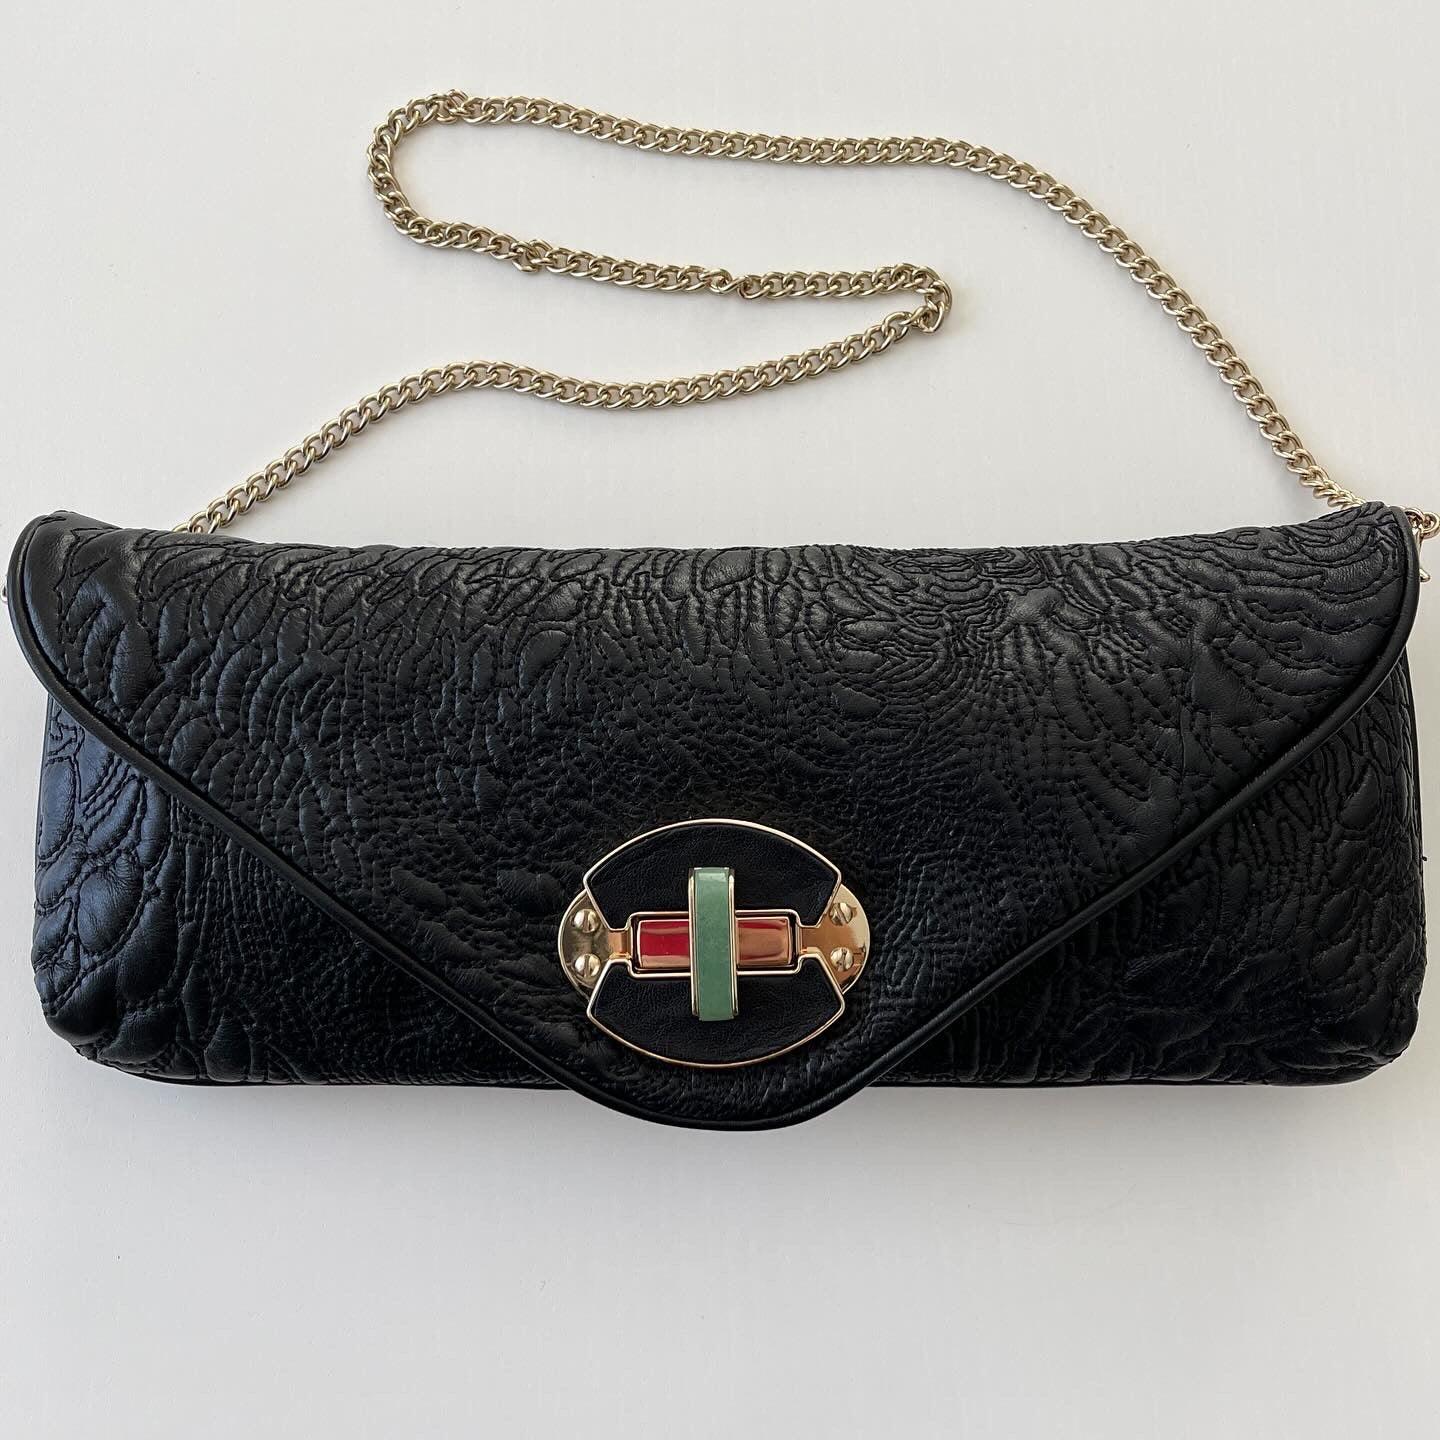 SHANGHAI TANG - SHANGHAI TANG Leather Handbag With Jade - AVVIIVVA.COM